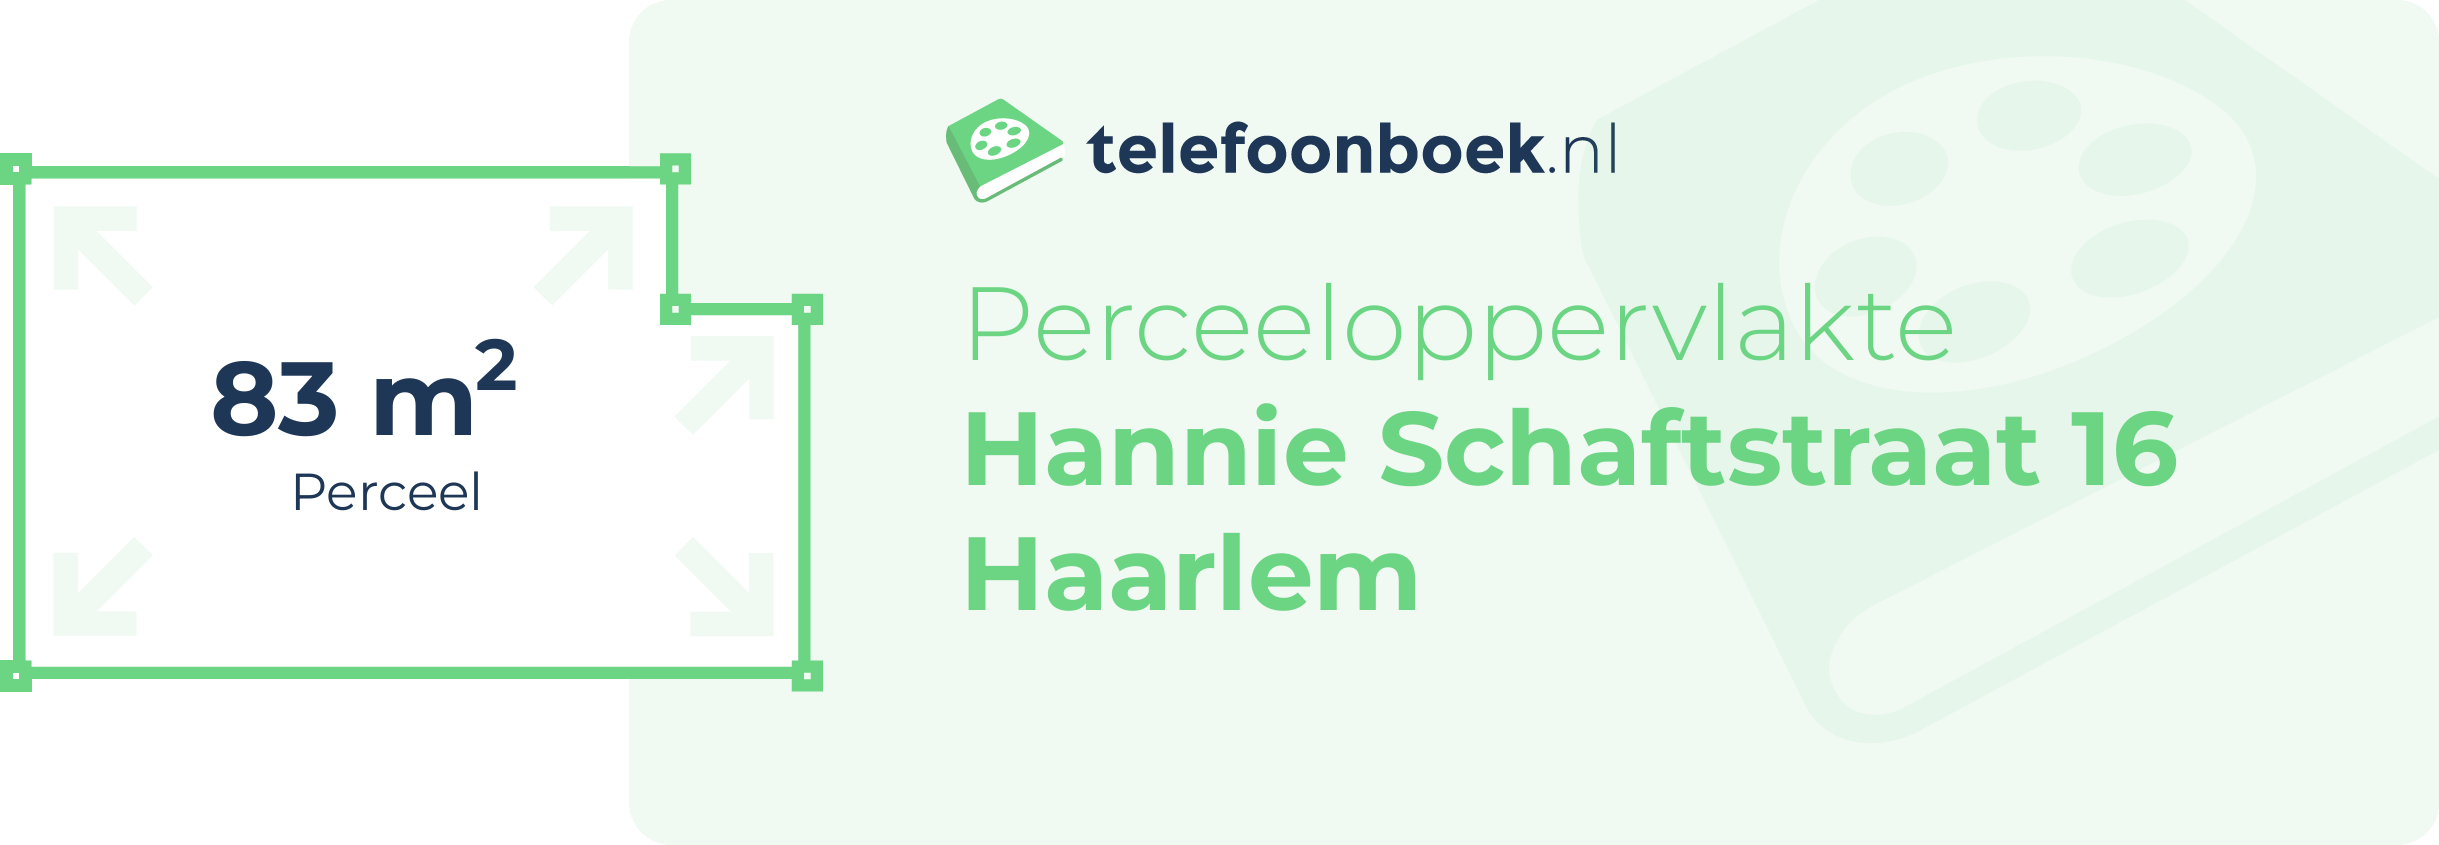 Perceeloppervlakte Hannie Schaftstraat 16 Haarlem